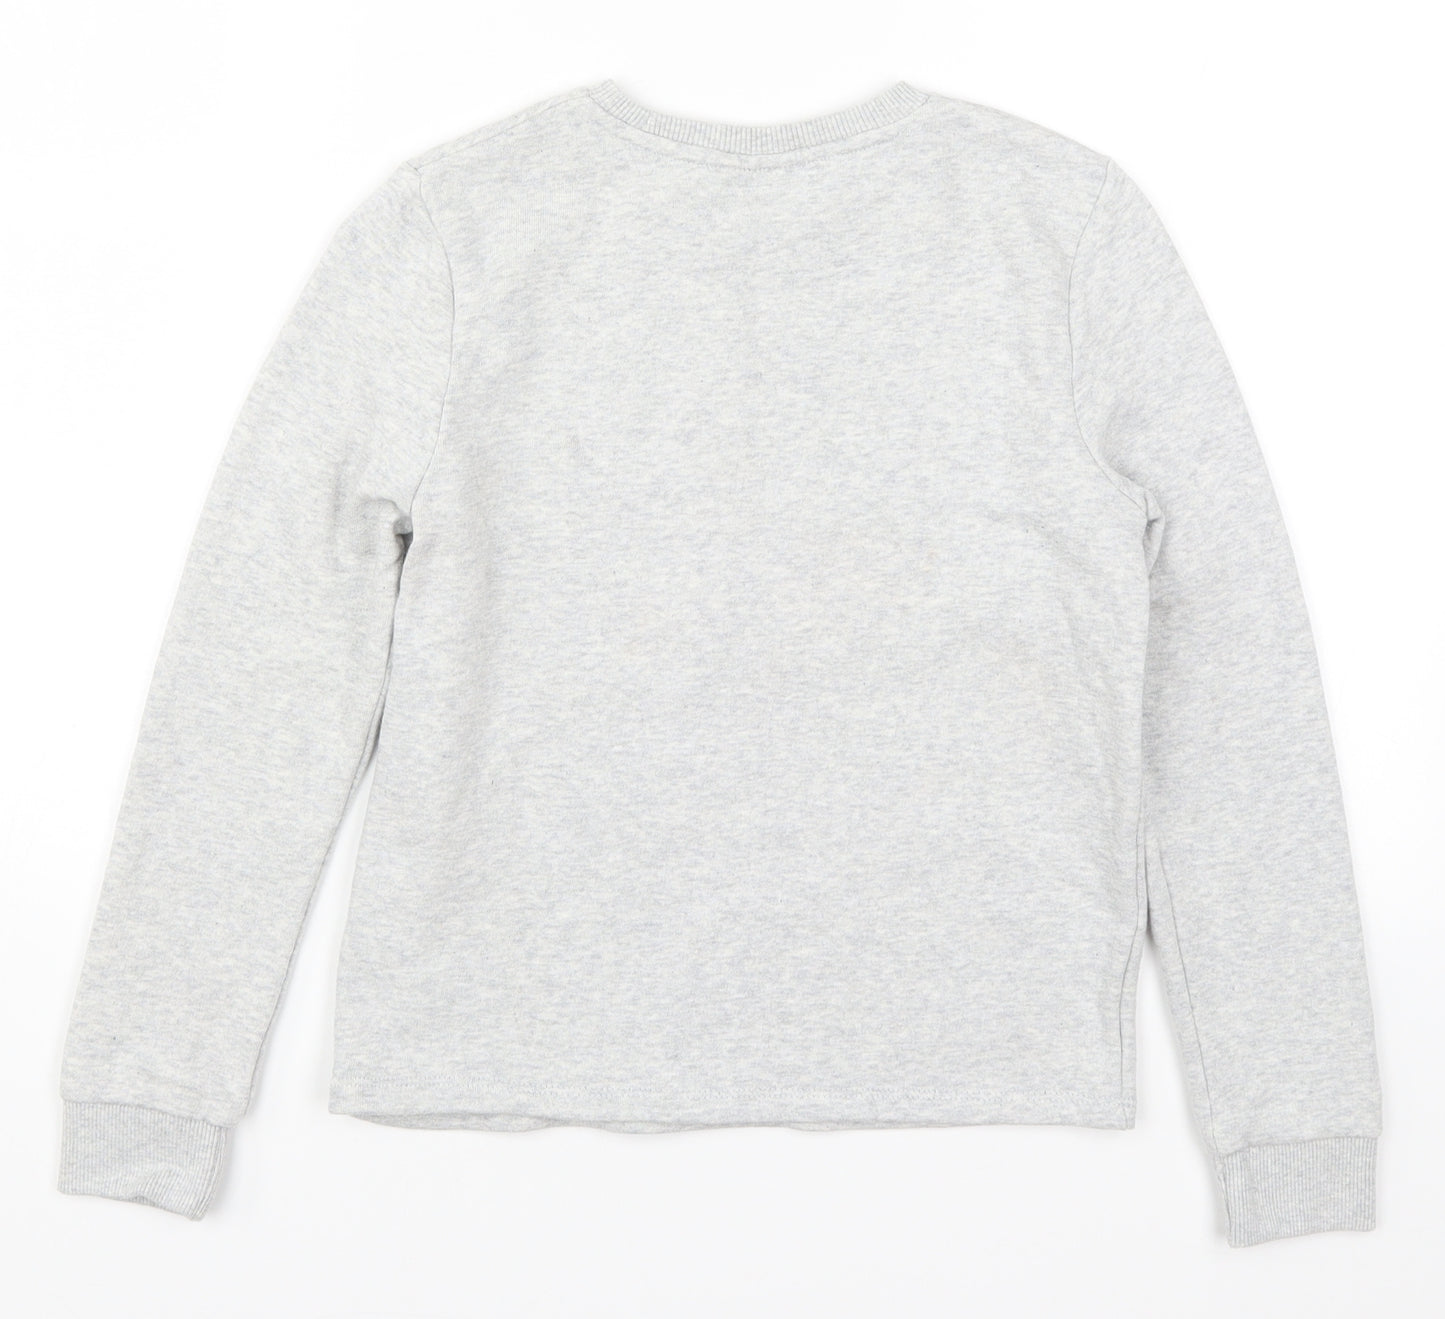 F&F Girls Grey   Pullover Sweatshirt Size 9-10 Years  - Team Unicorn Always Believe